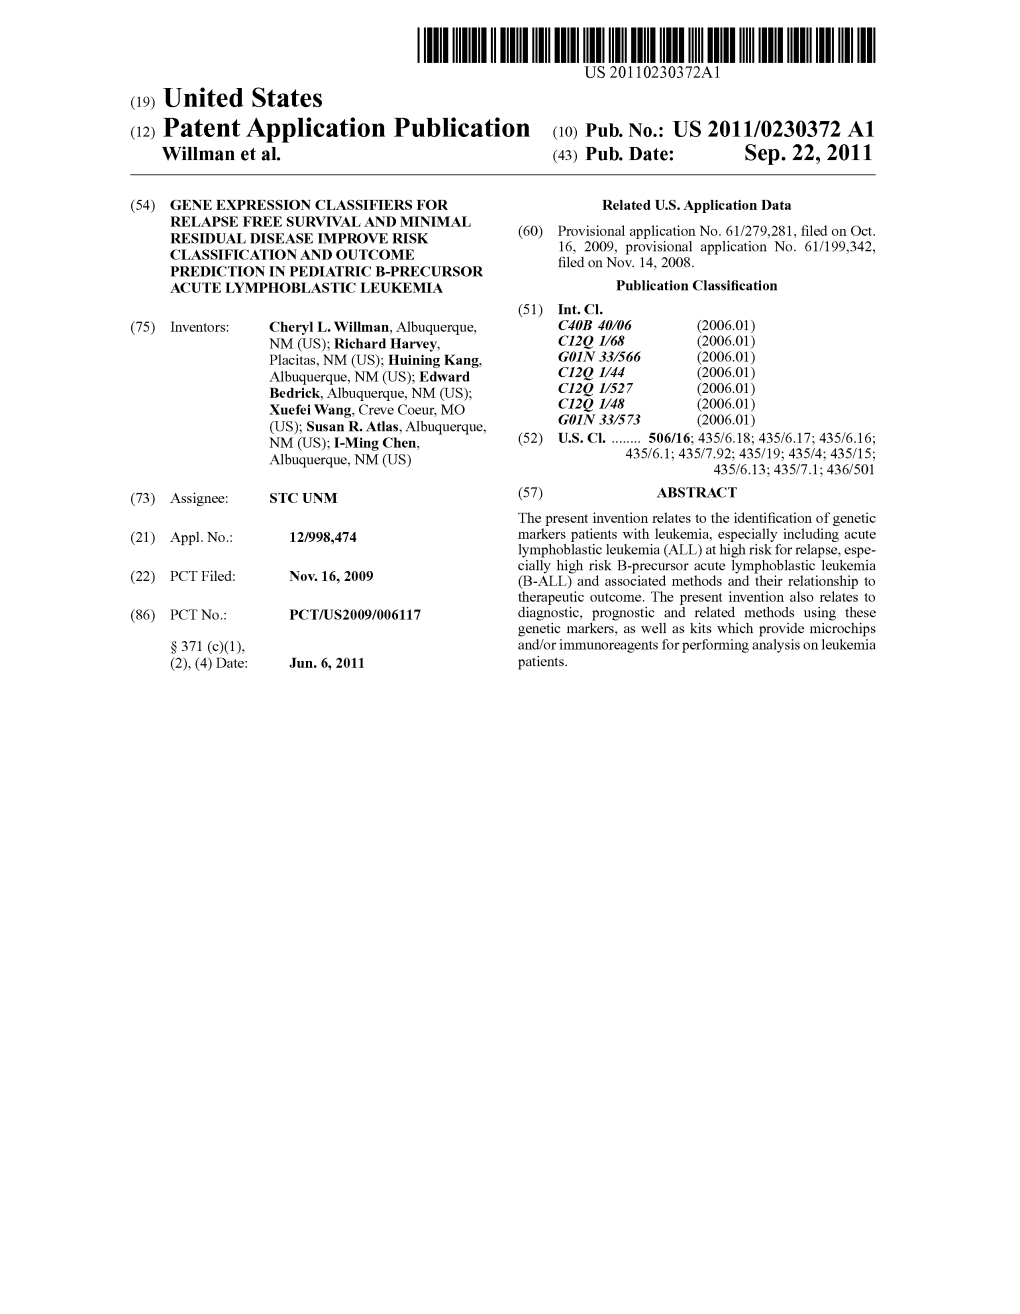 (12) Patent Application Publication (10) Pub. No.: US 2011/0230372 A1 Willman Et Al